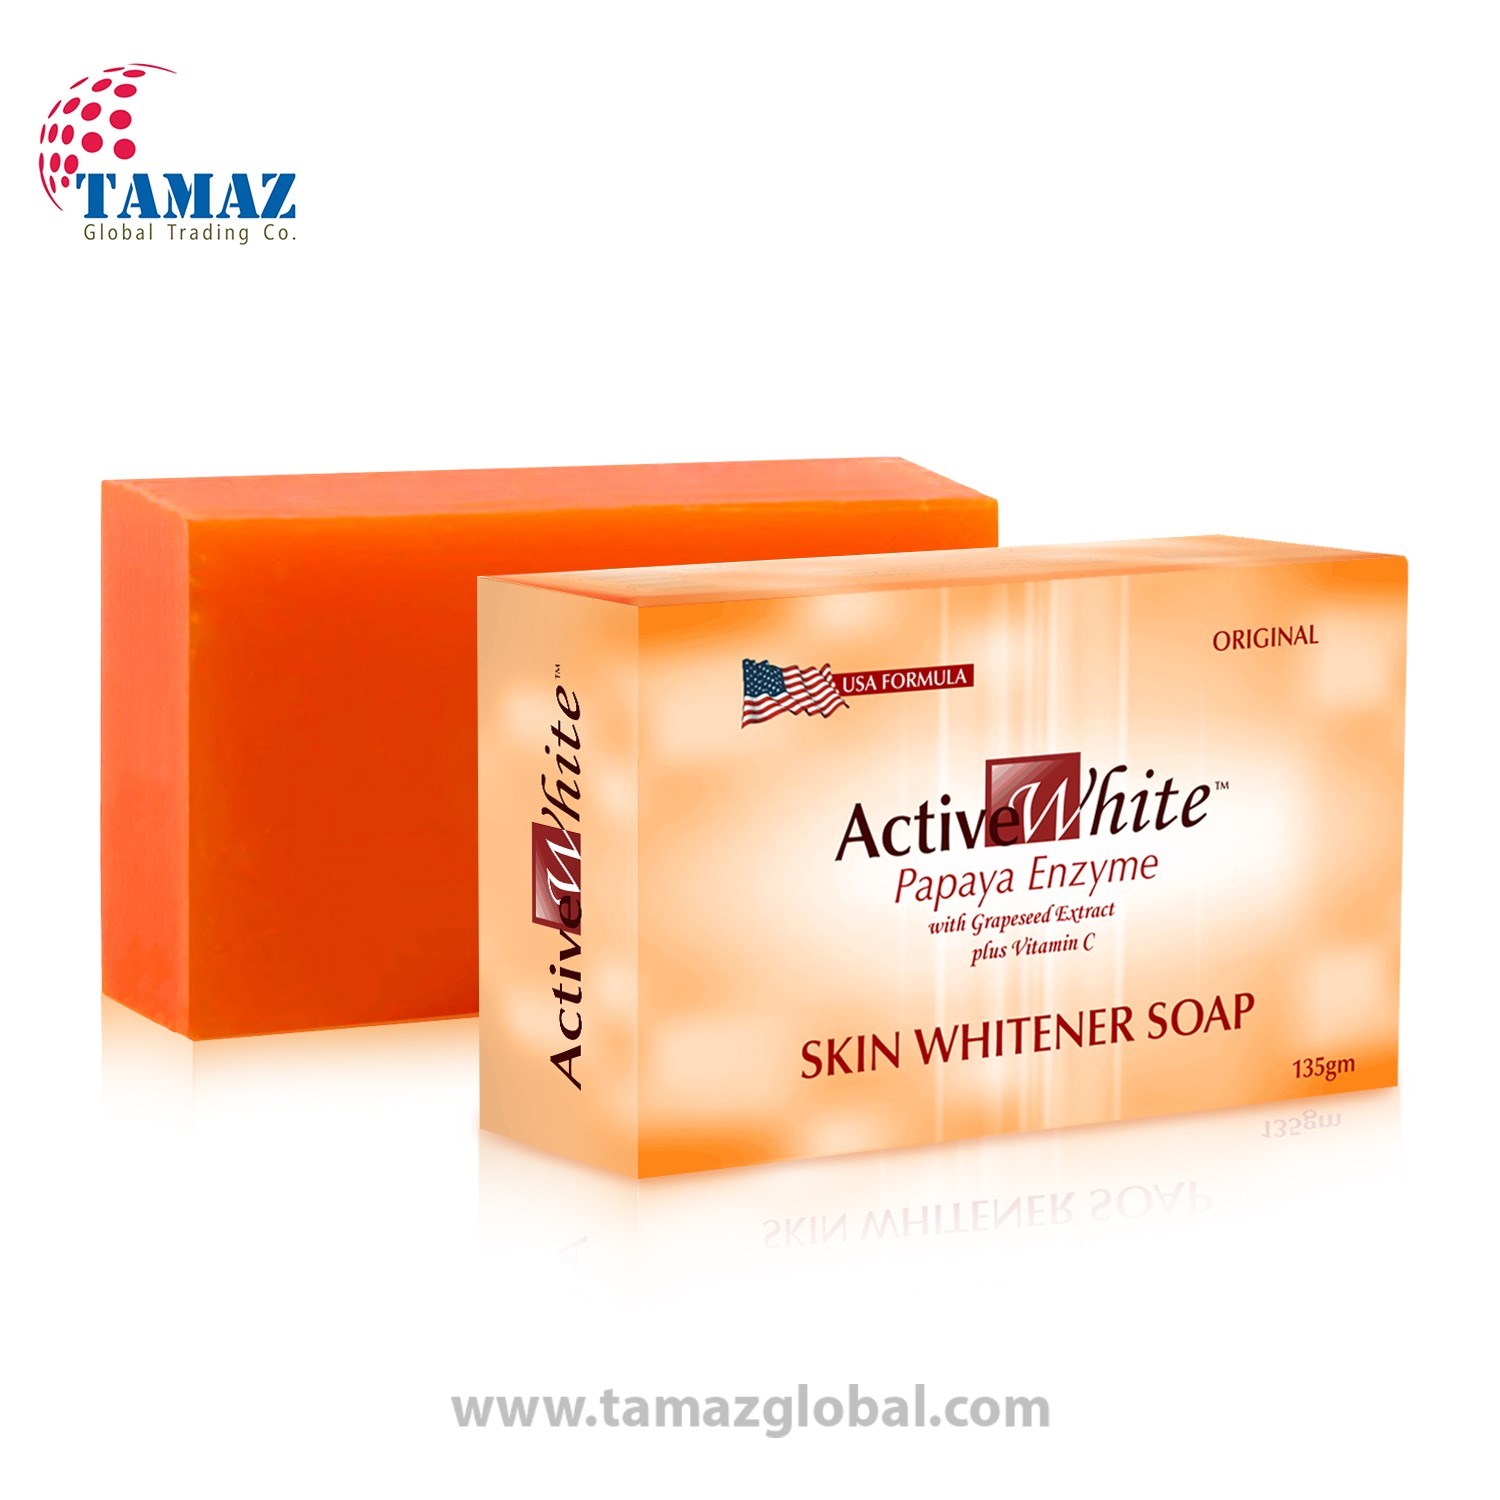 active white papaya enzyme skin whitening soap